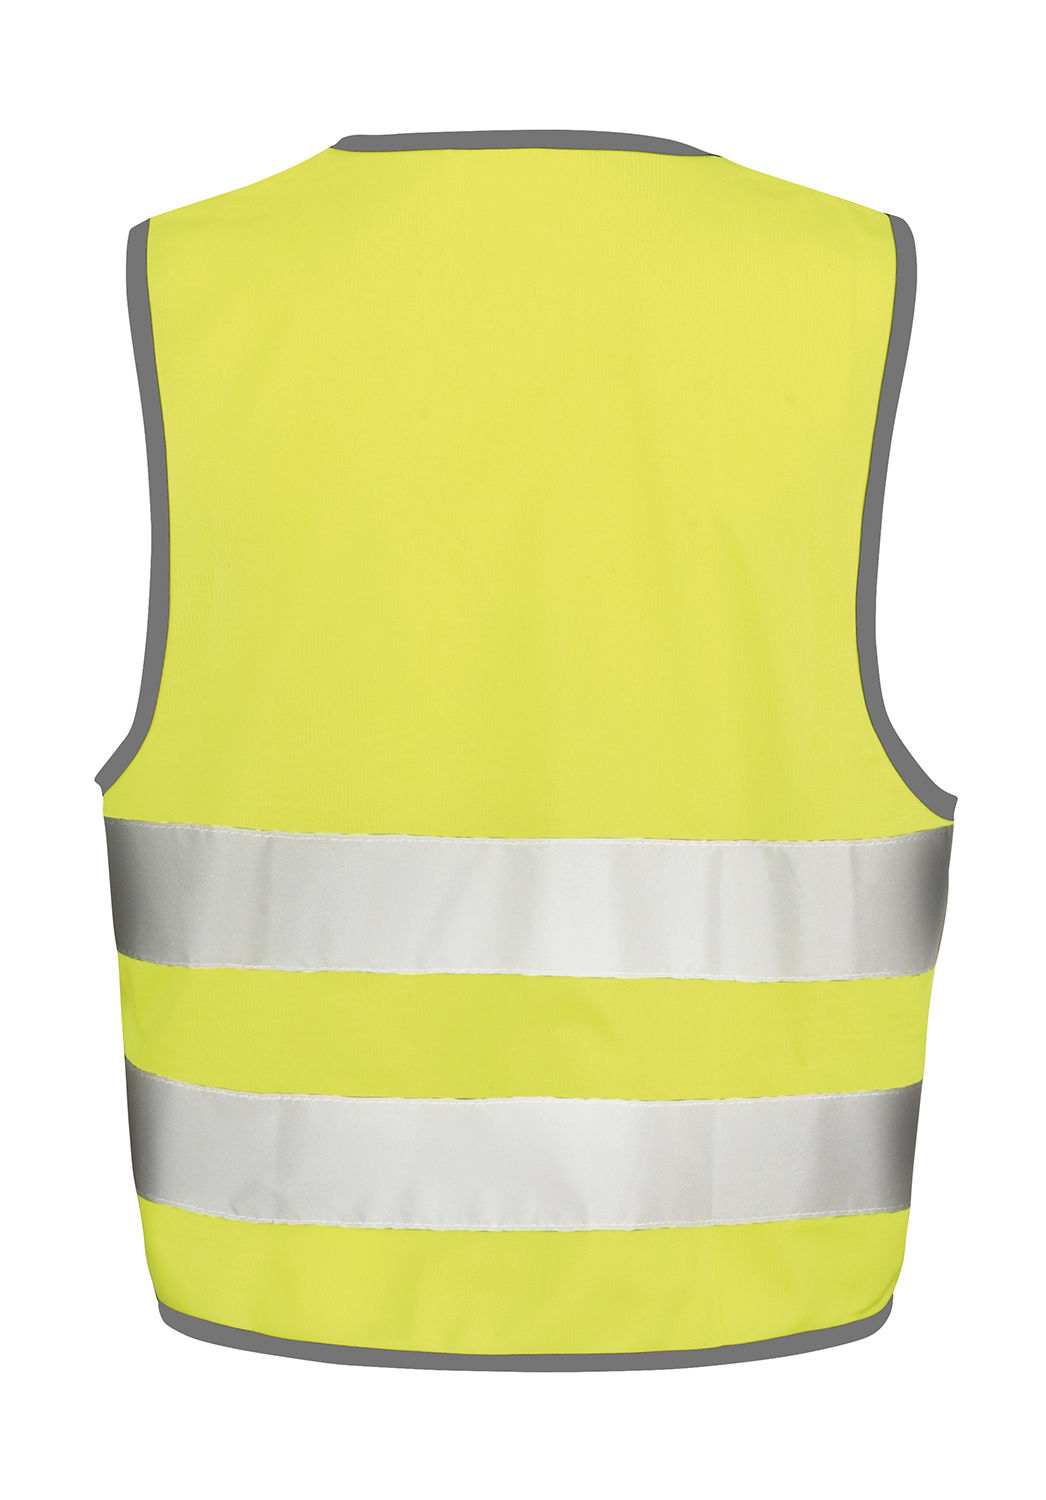 https://www.textile-publicitaire-pro.com/images/textile-publicitaire/produit/large/vestes-pub-promo-core-junior-safety-802-33_fluorescent-yellow.jpg